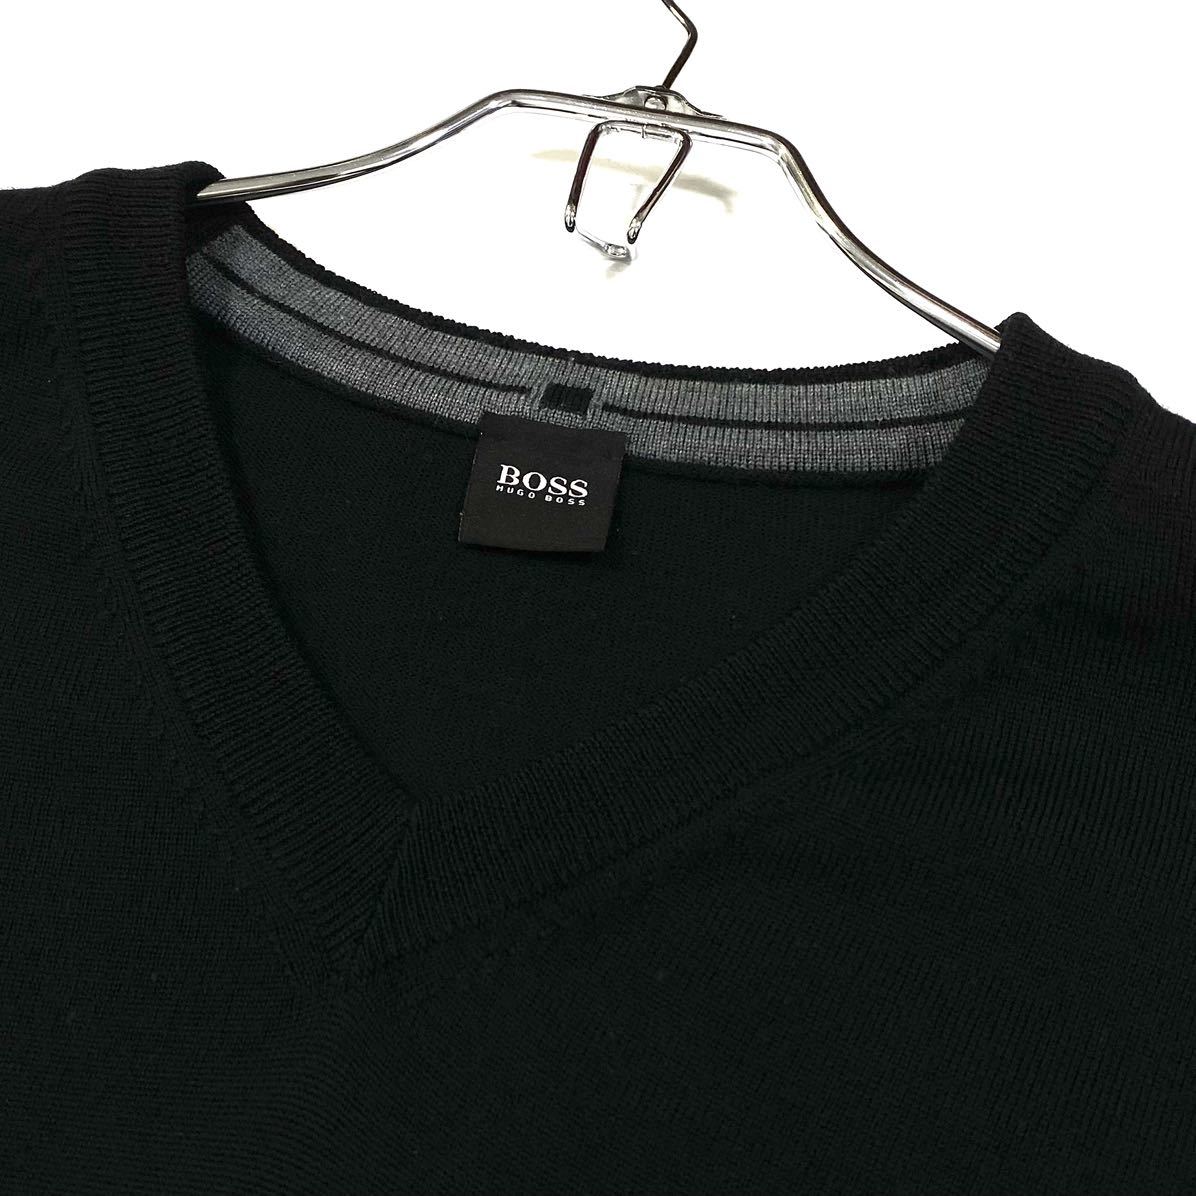 HUGO BOSS(ヒューゴボス)Vネック ニットセーター 刺繍ロゴ ウール100% メンズXXL ブラック_画像4